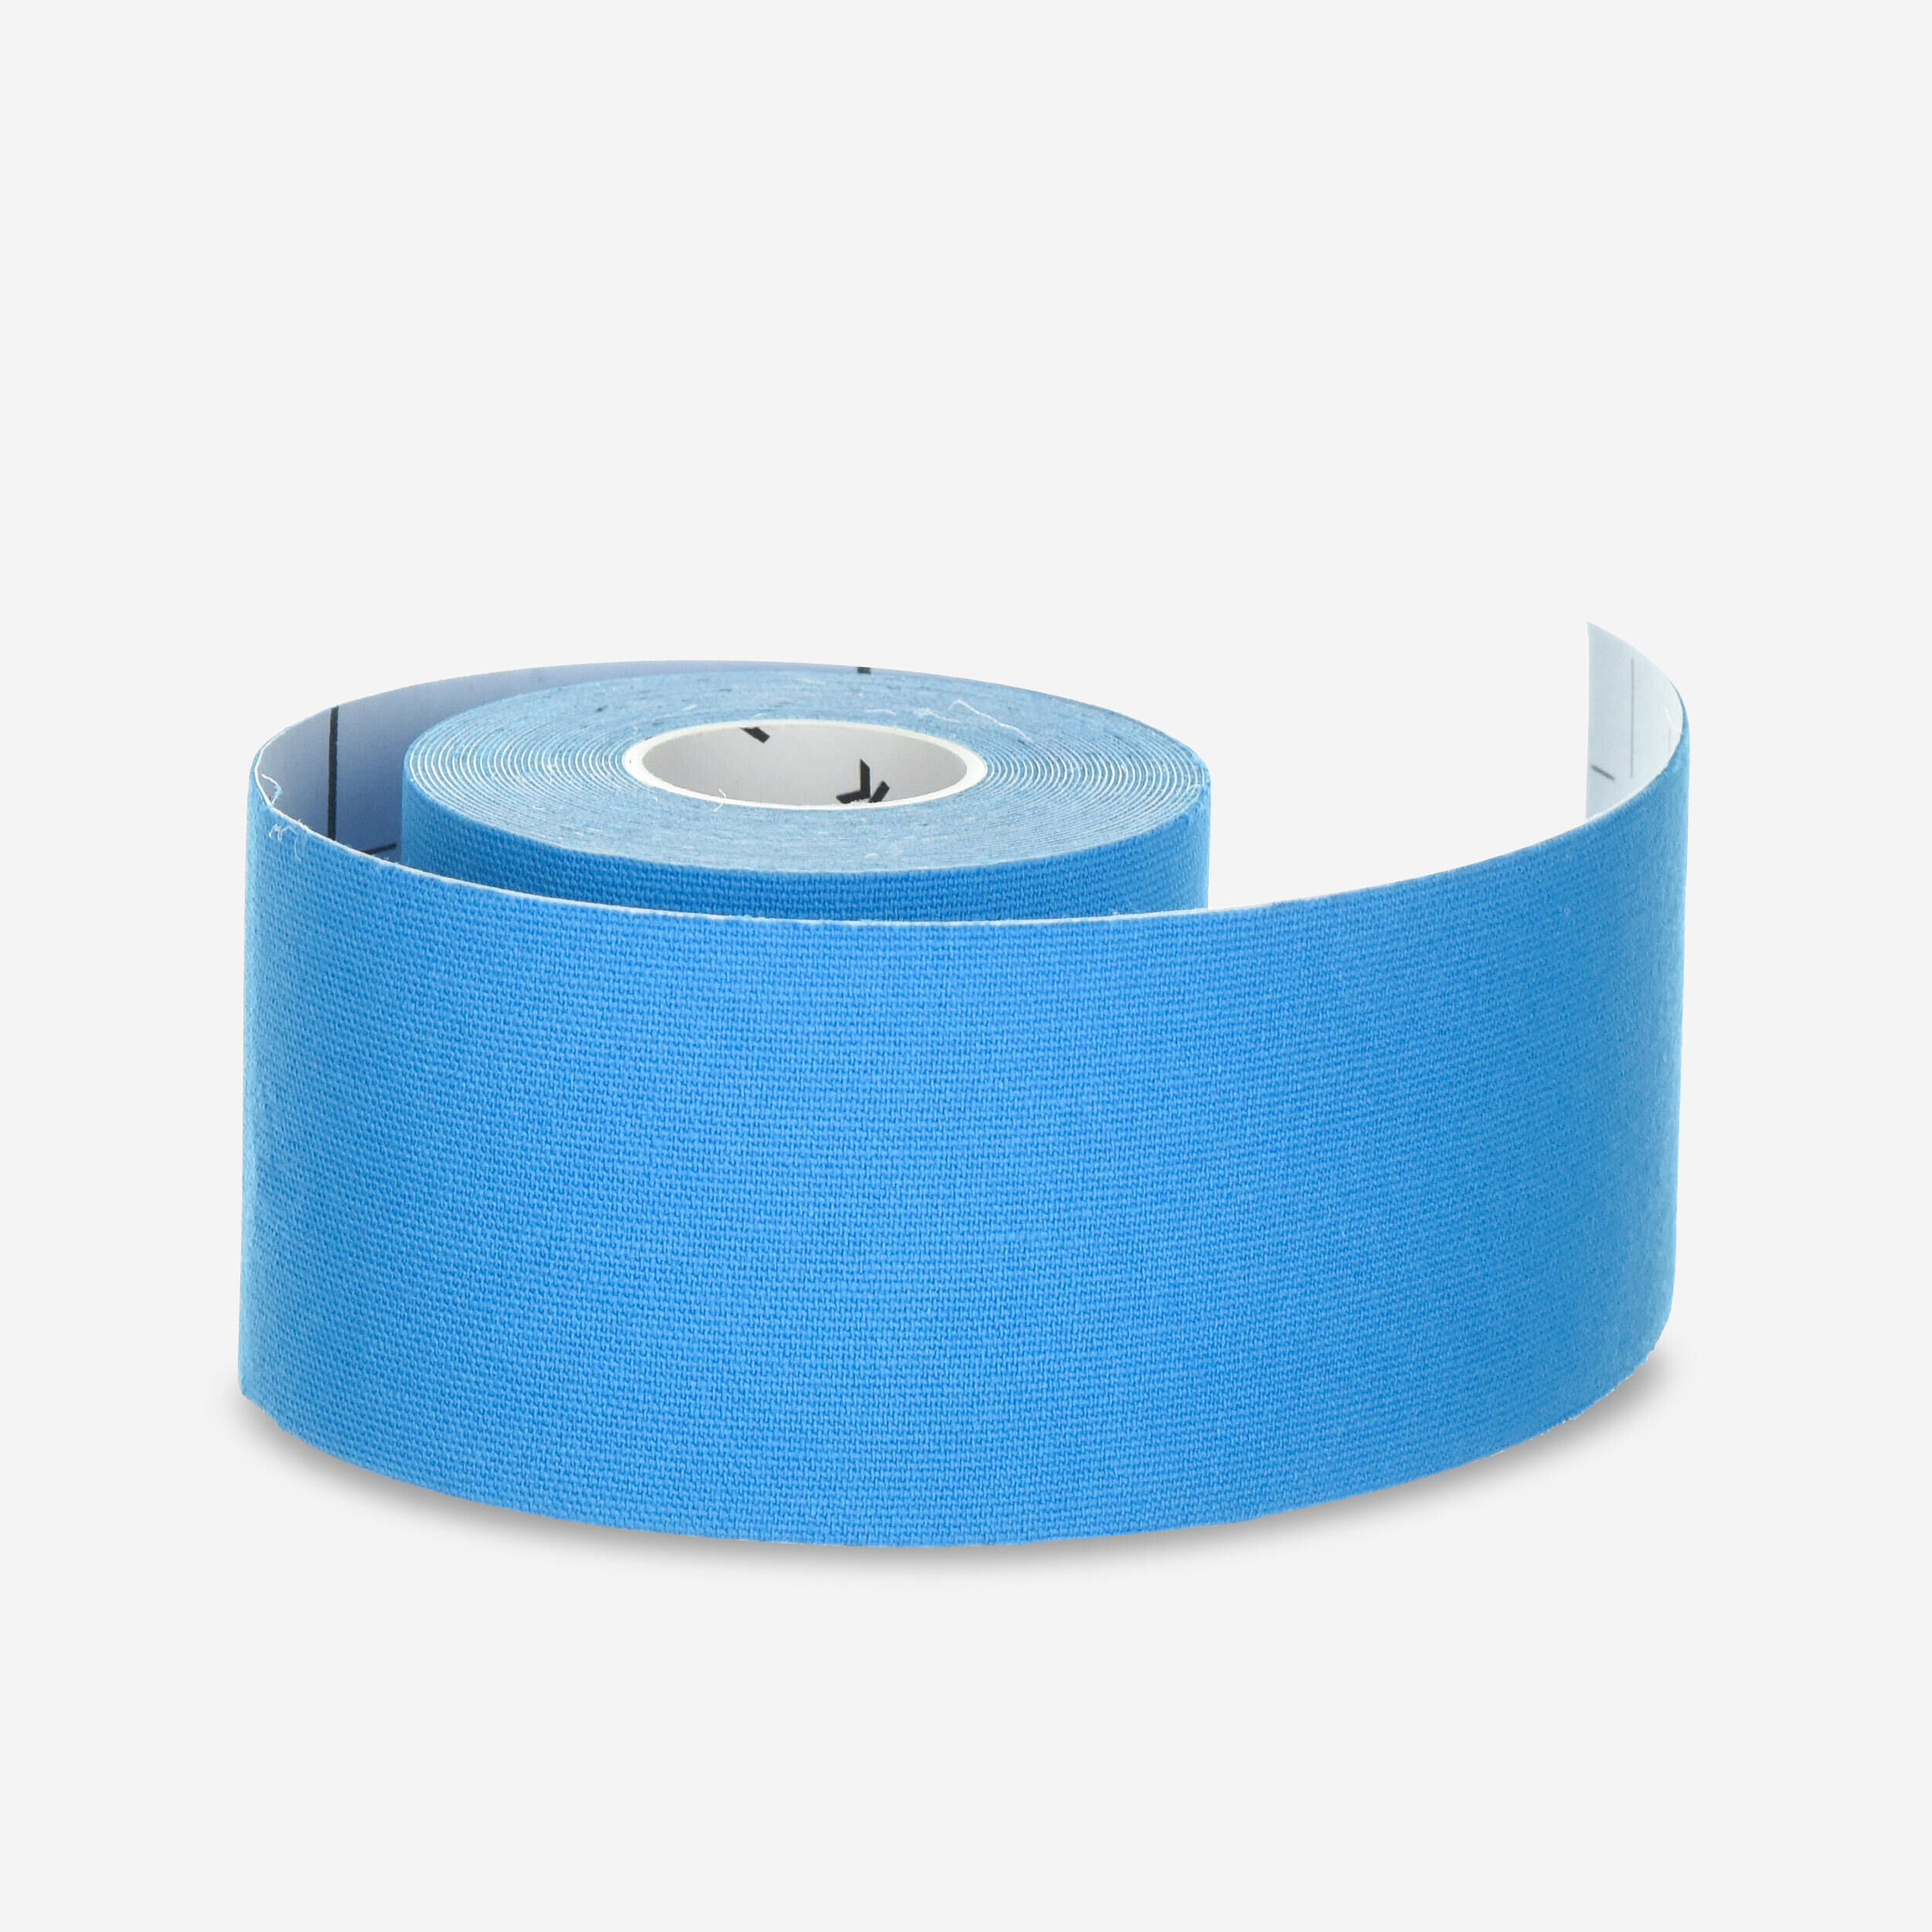 TARMAK 5 cm x 5 m Kinesiology Support Strap - Blue